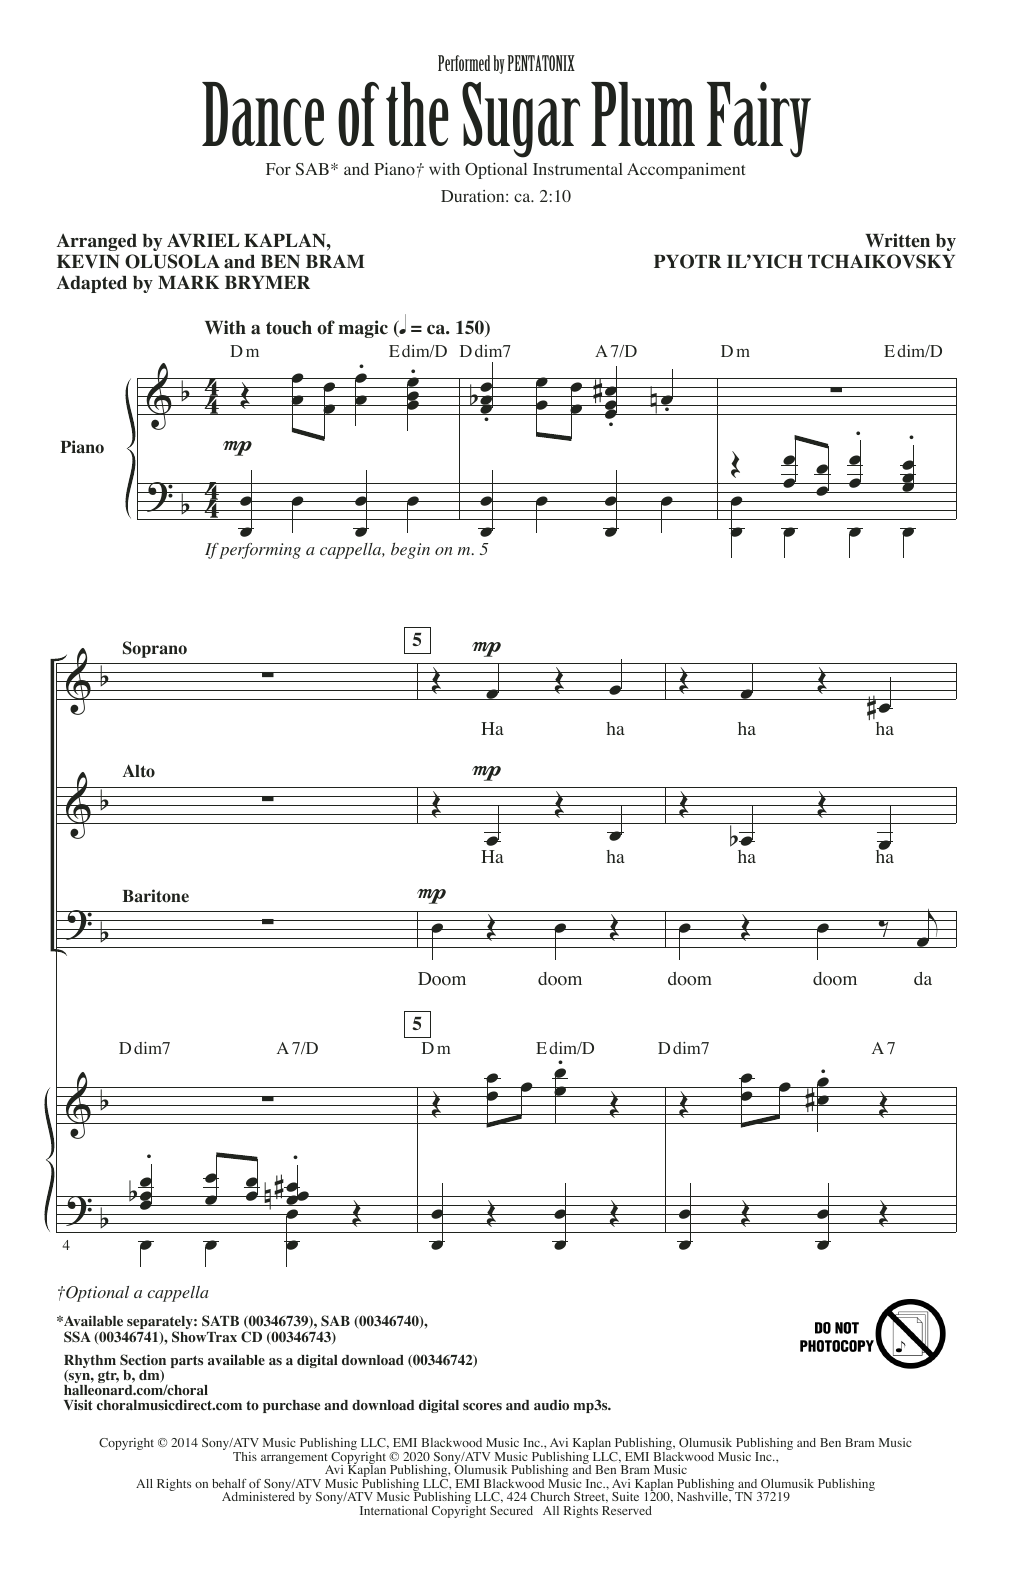 Pentatonix Dance Of The Sugar Plum Fairy (arr. Mark Brymer) Sheet Music Notes & Chords for SAB Choir - Download or Print PDF